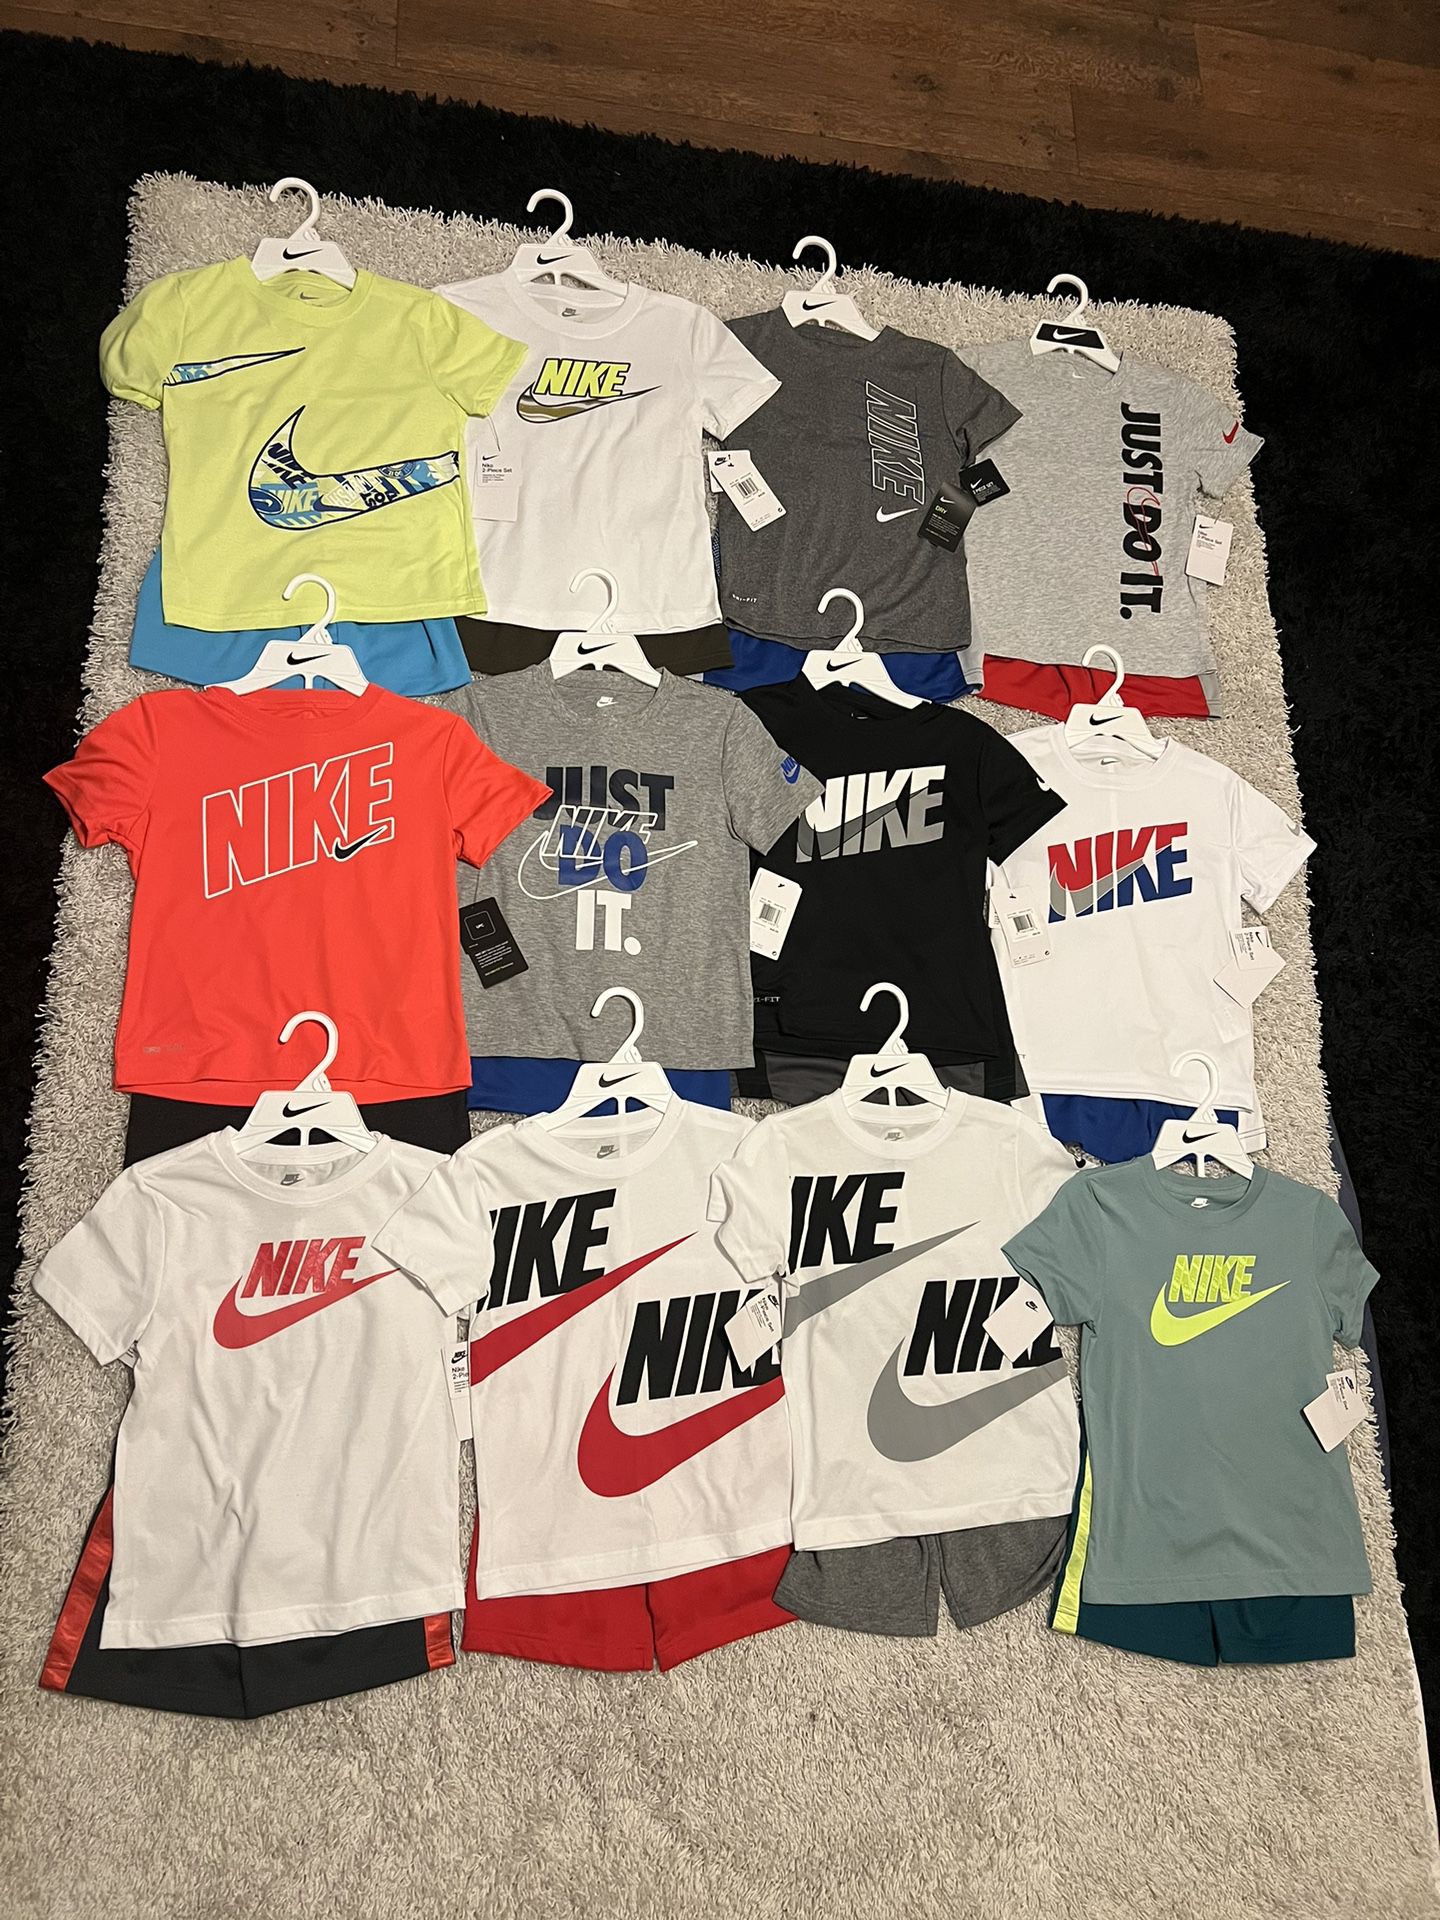 NWT Nike size 7 Boys